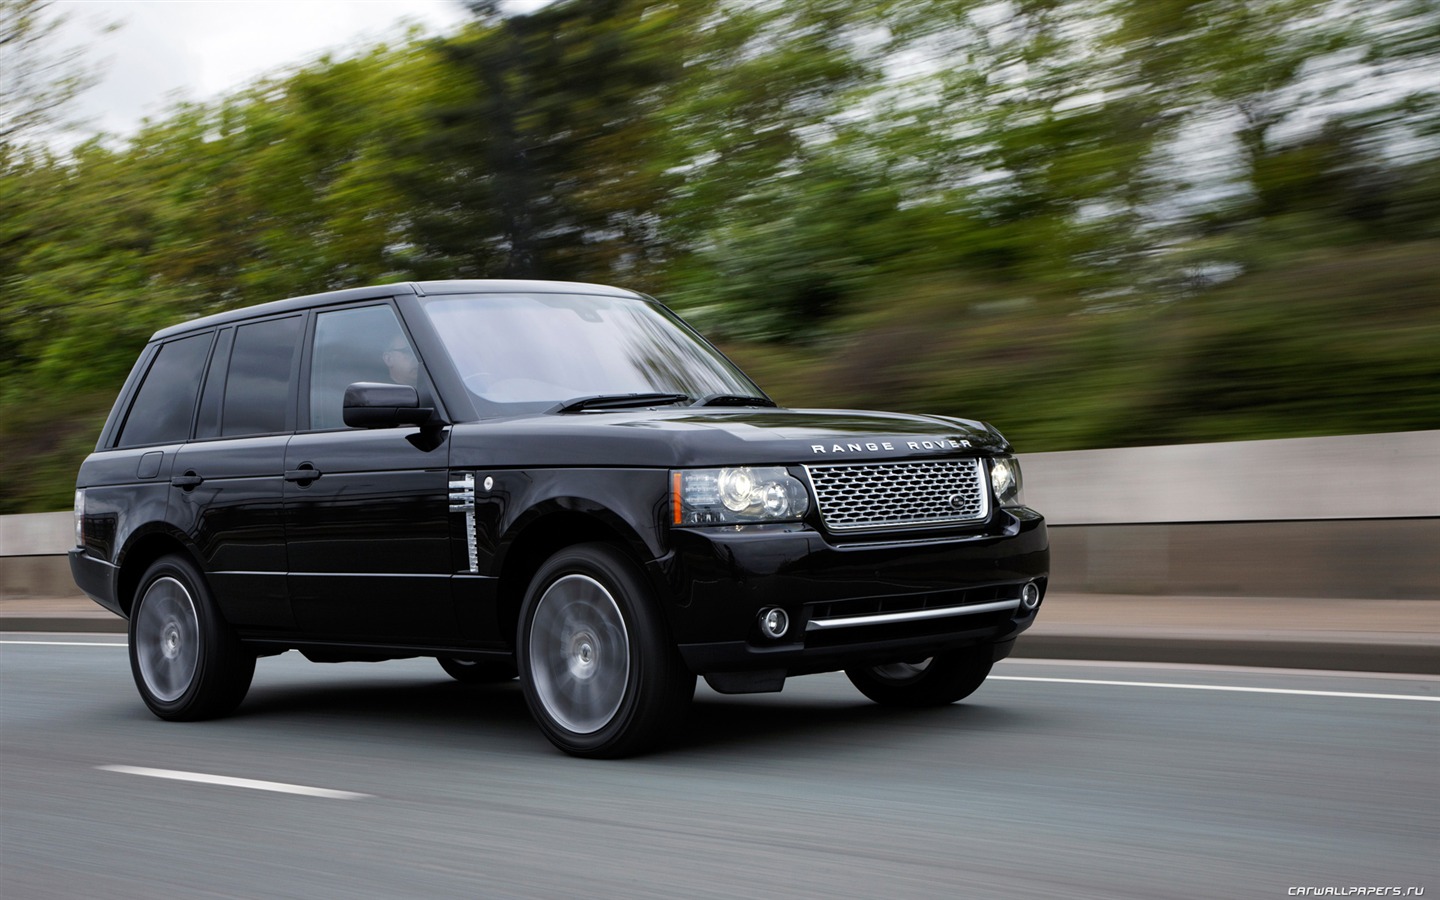 Land Rover Range Rover Black Edition - 2011 路虎16 - 1440x900